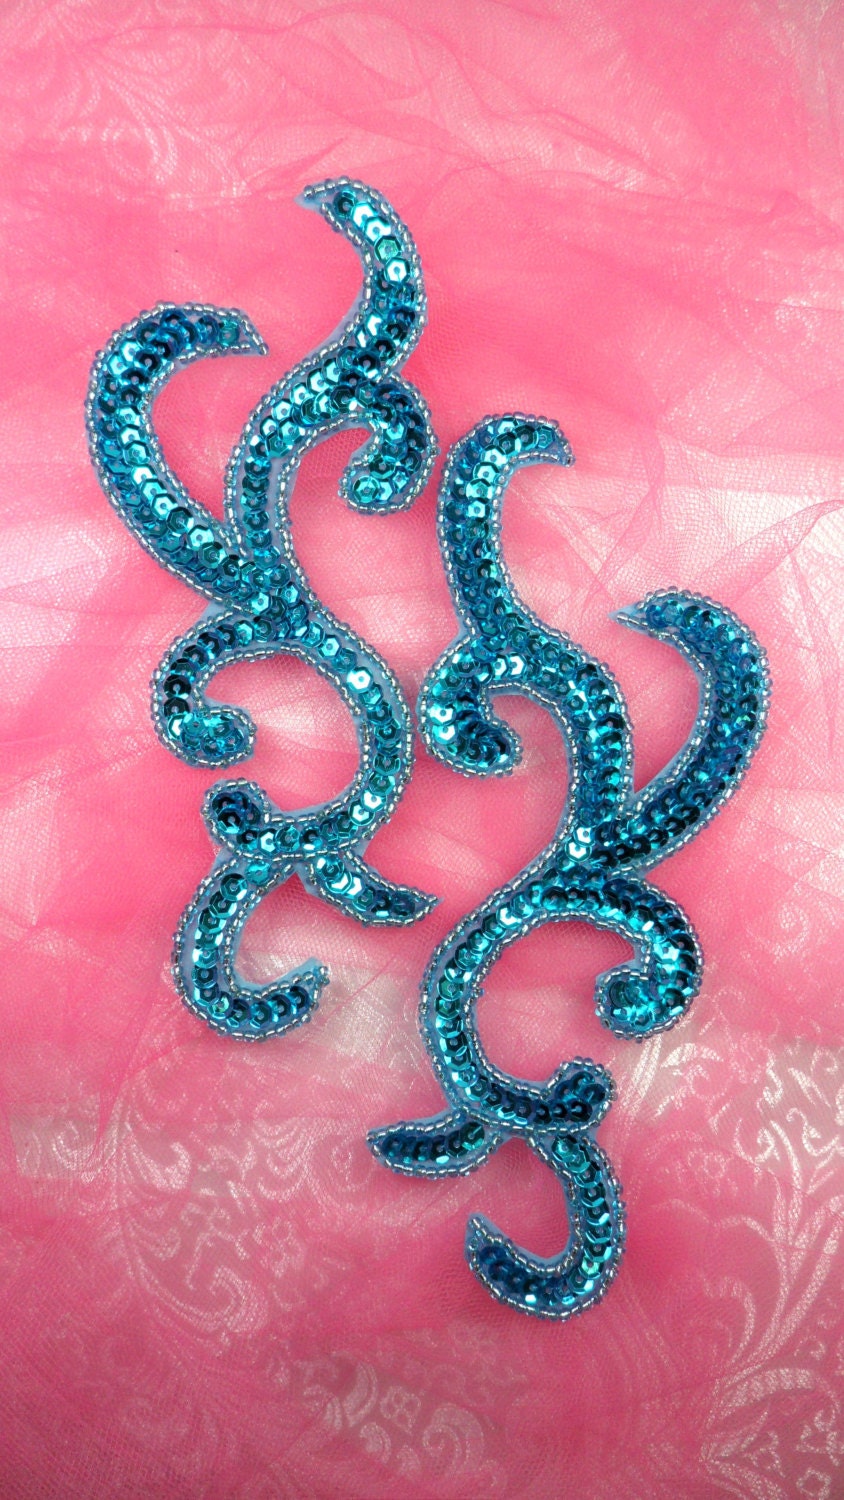 Aquamarine Chunky glitter for Resin Epoxy crafts